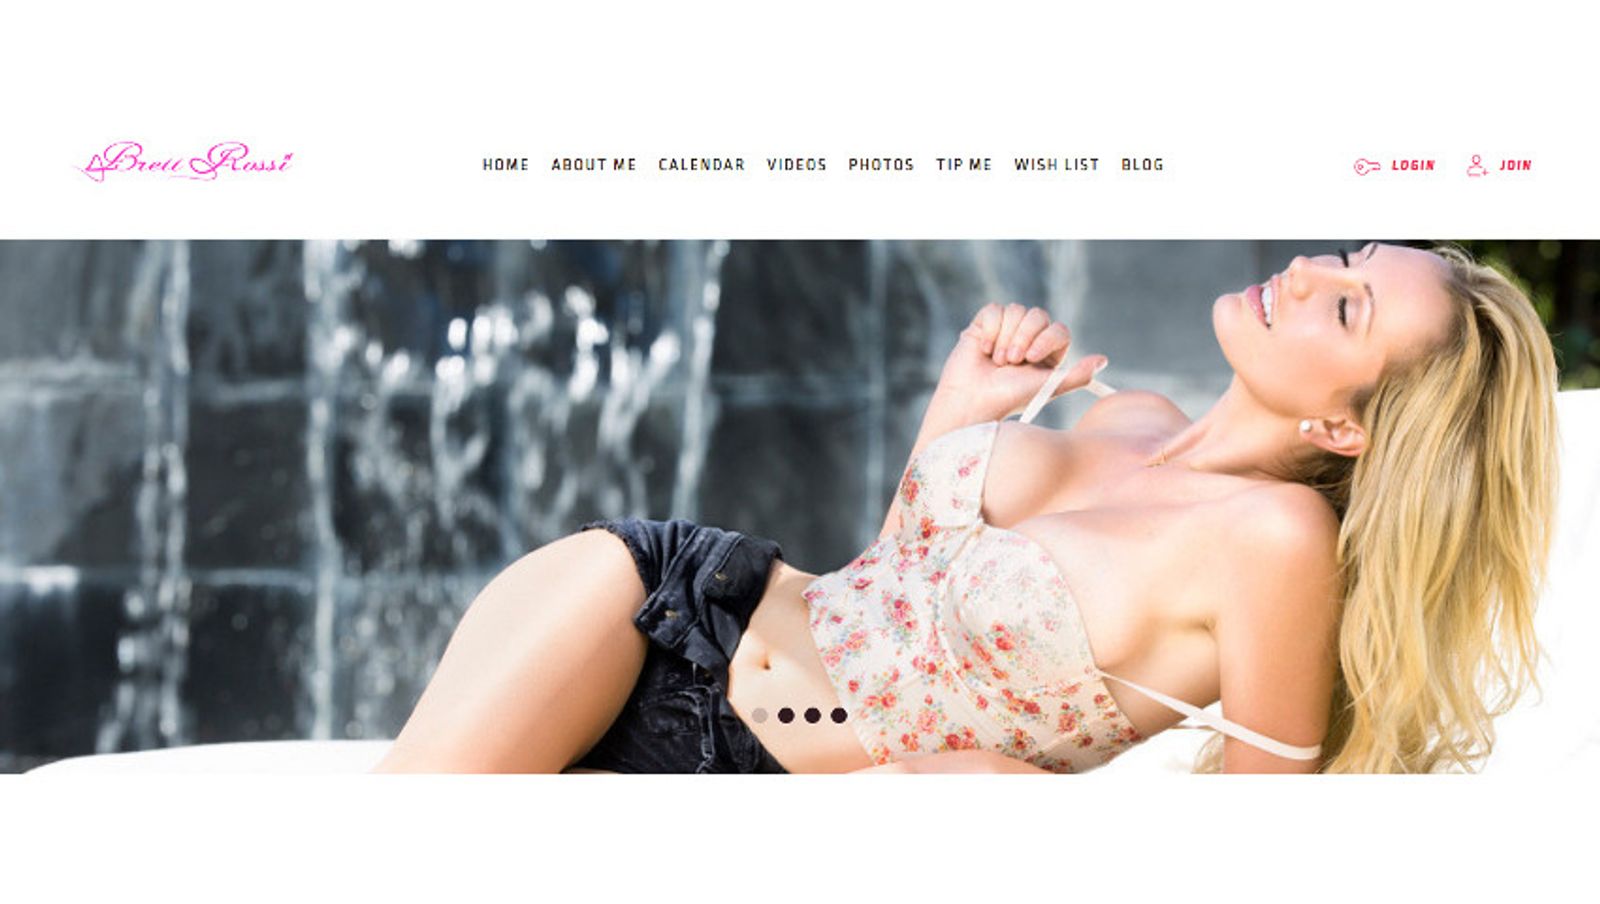 Brett Rossi Relaunches Site With CrushGirls Network